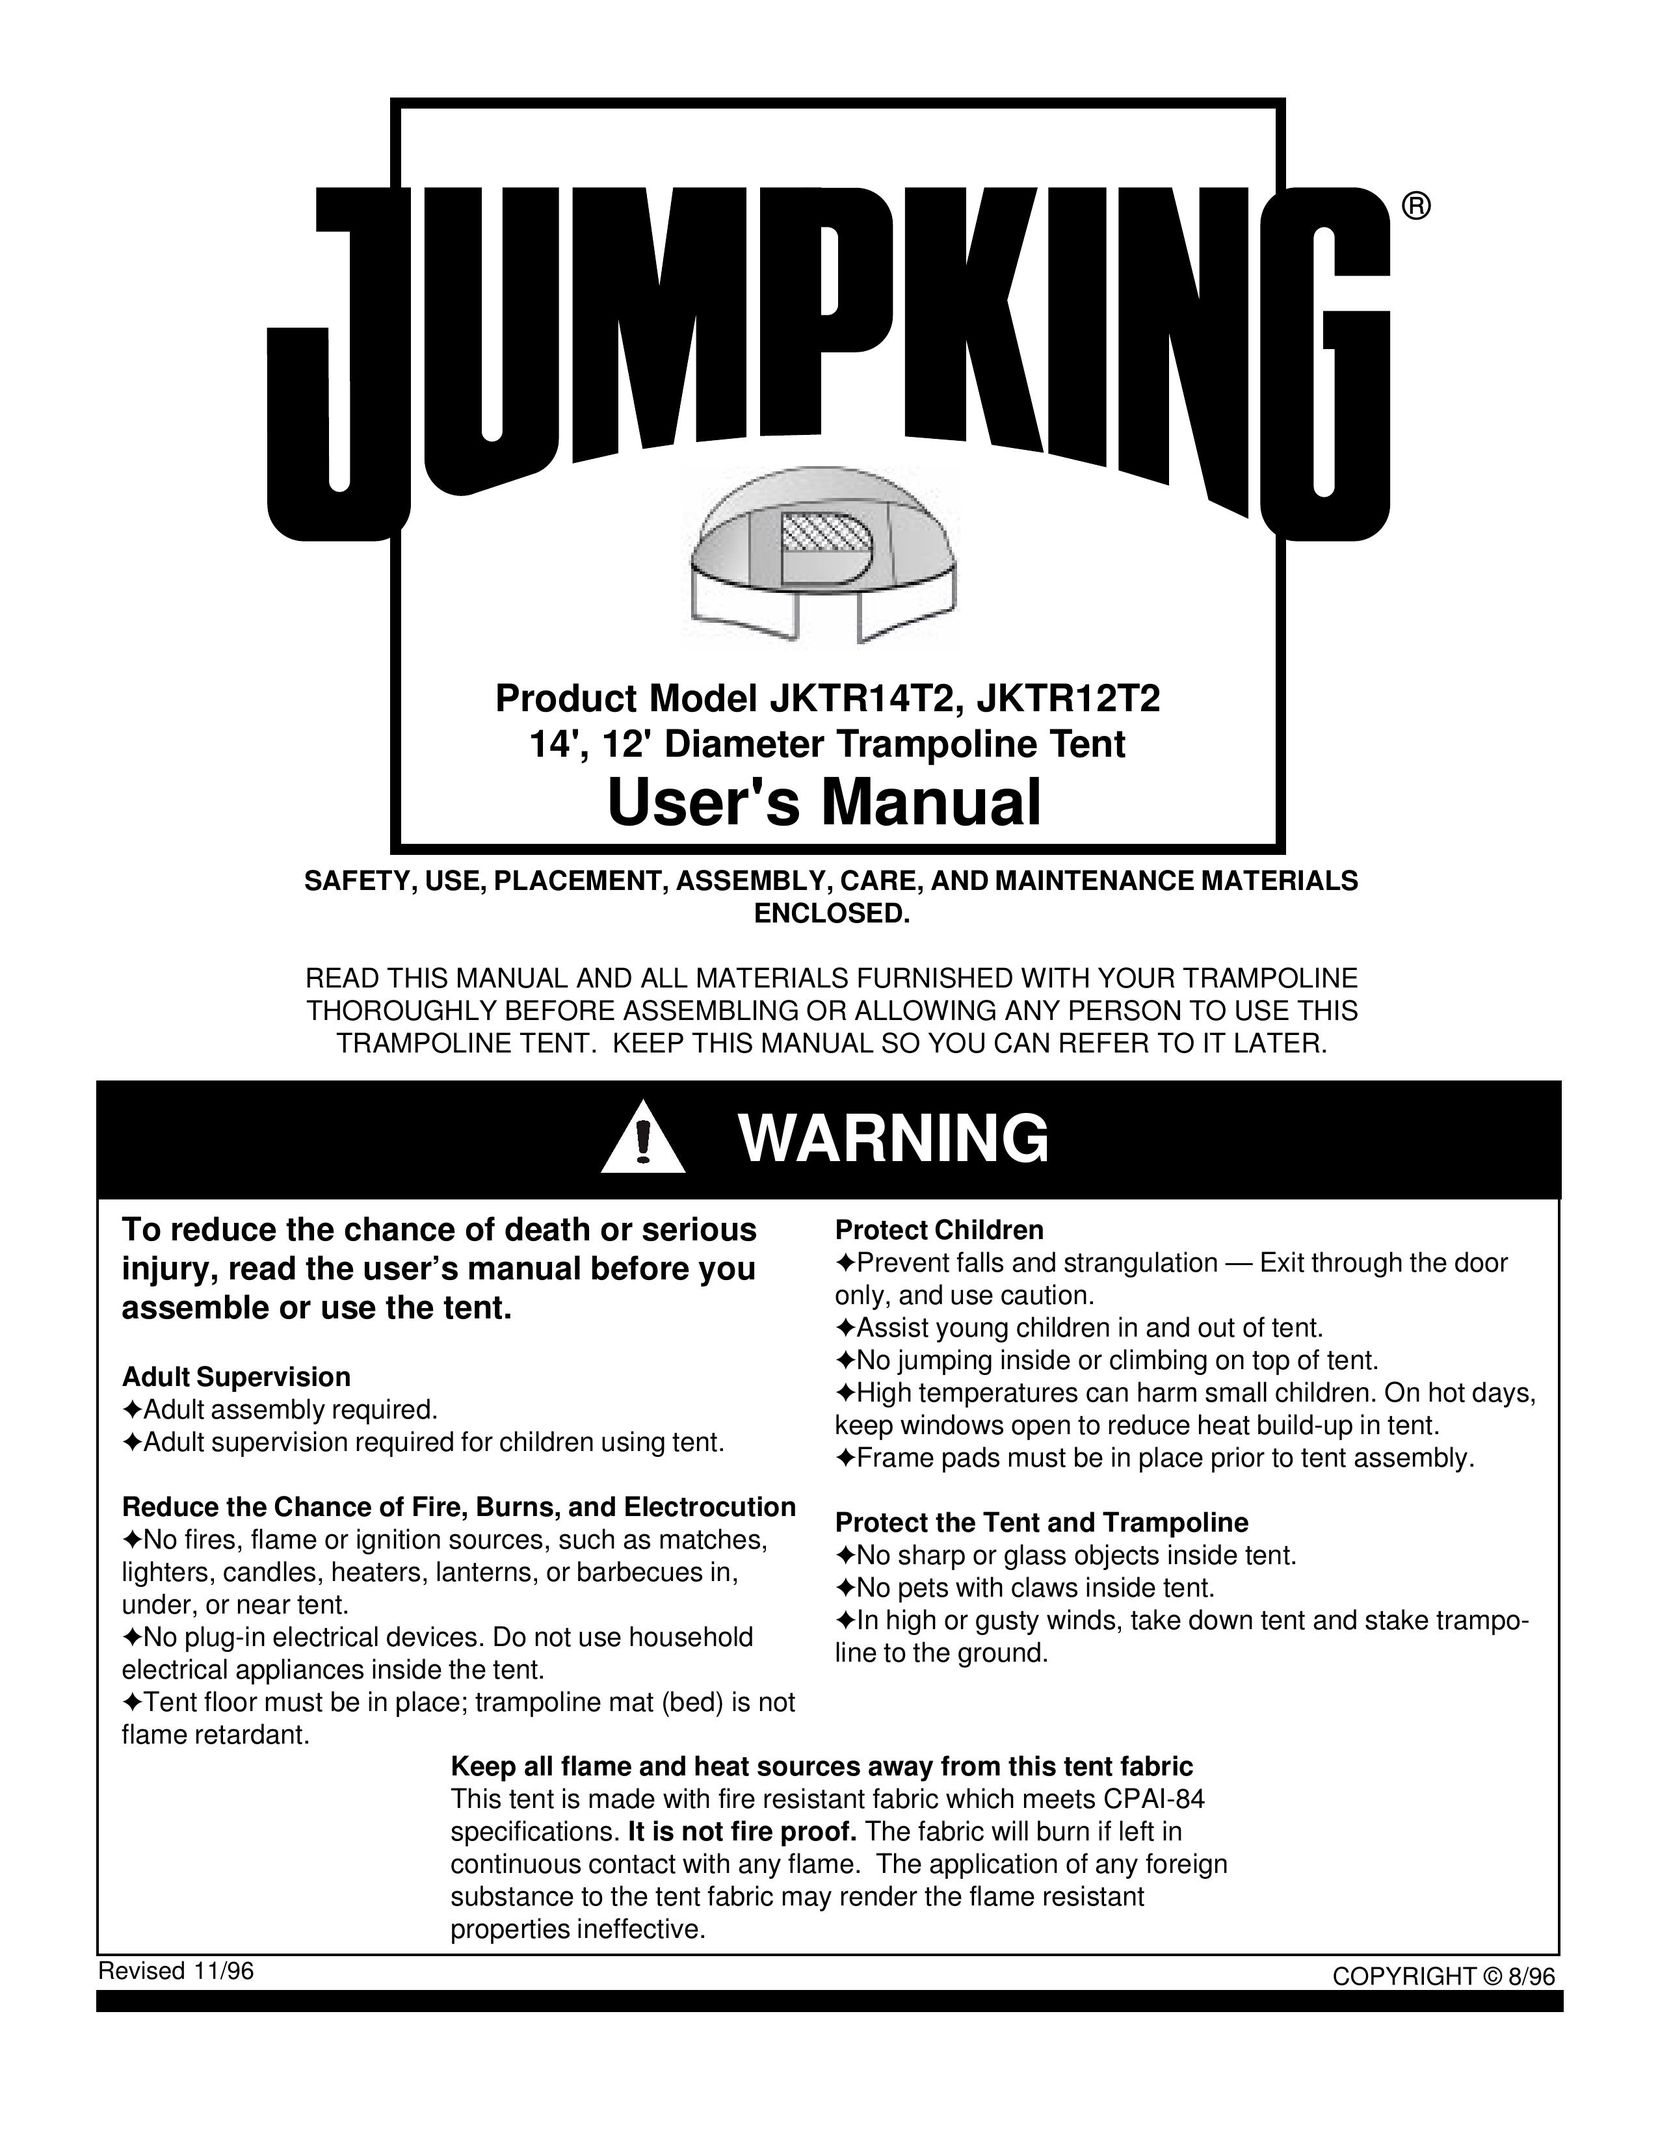 Jumpking JKTR12T2 Camping Equipment User Manual